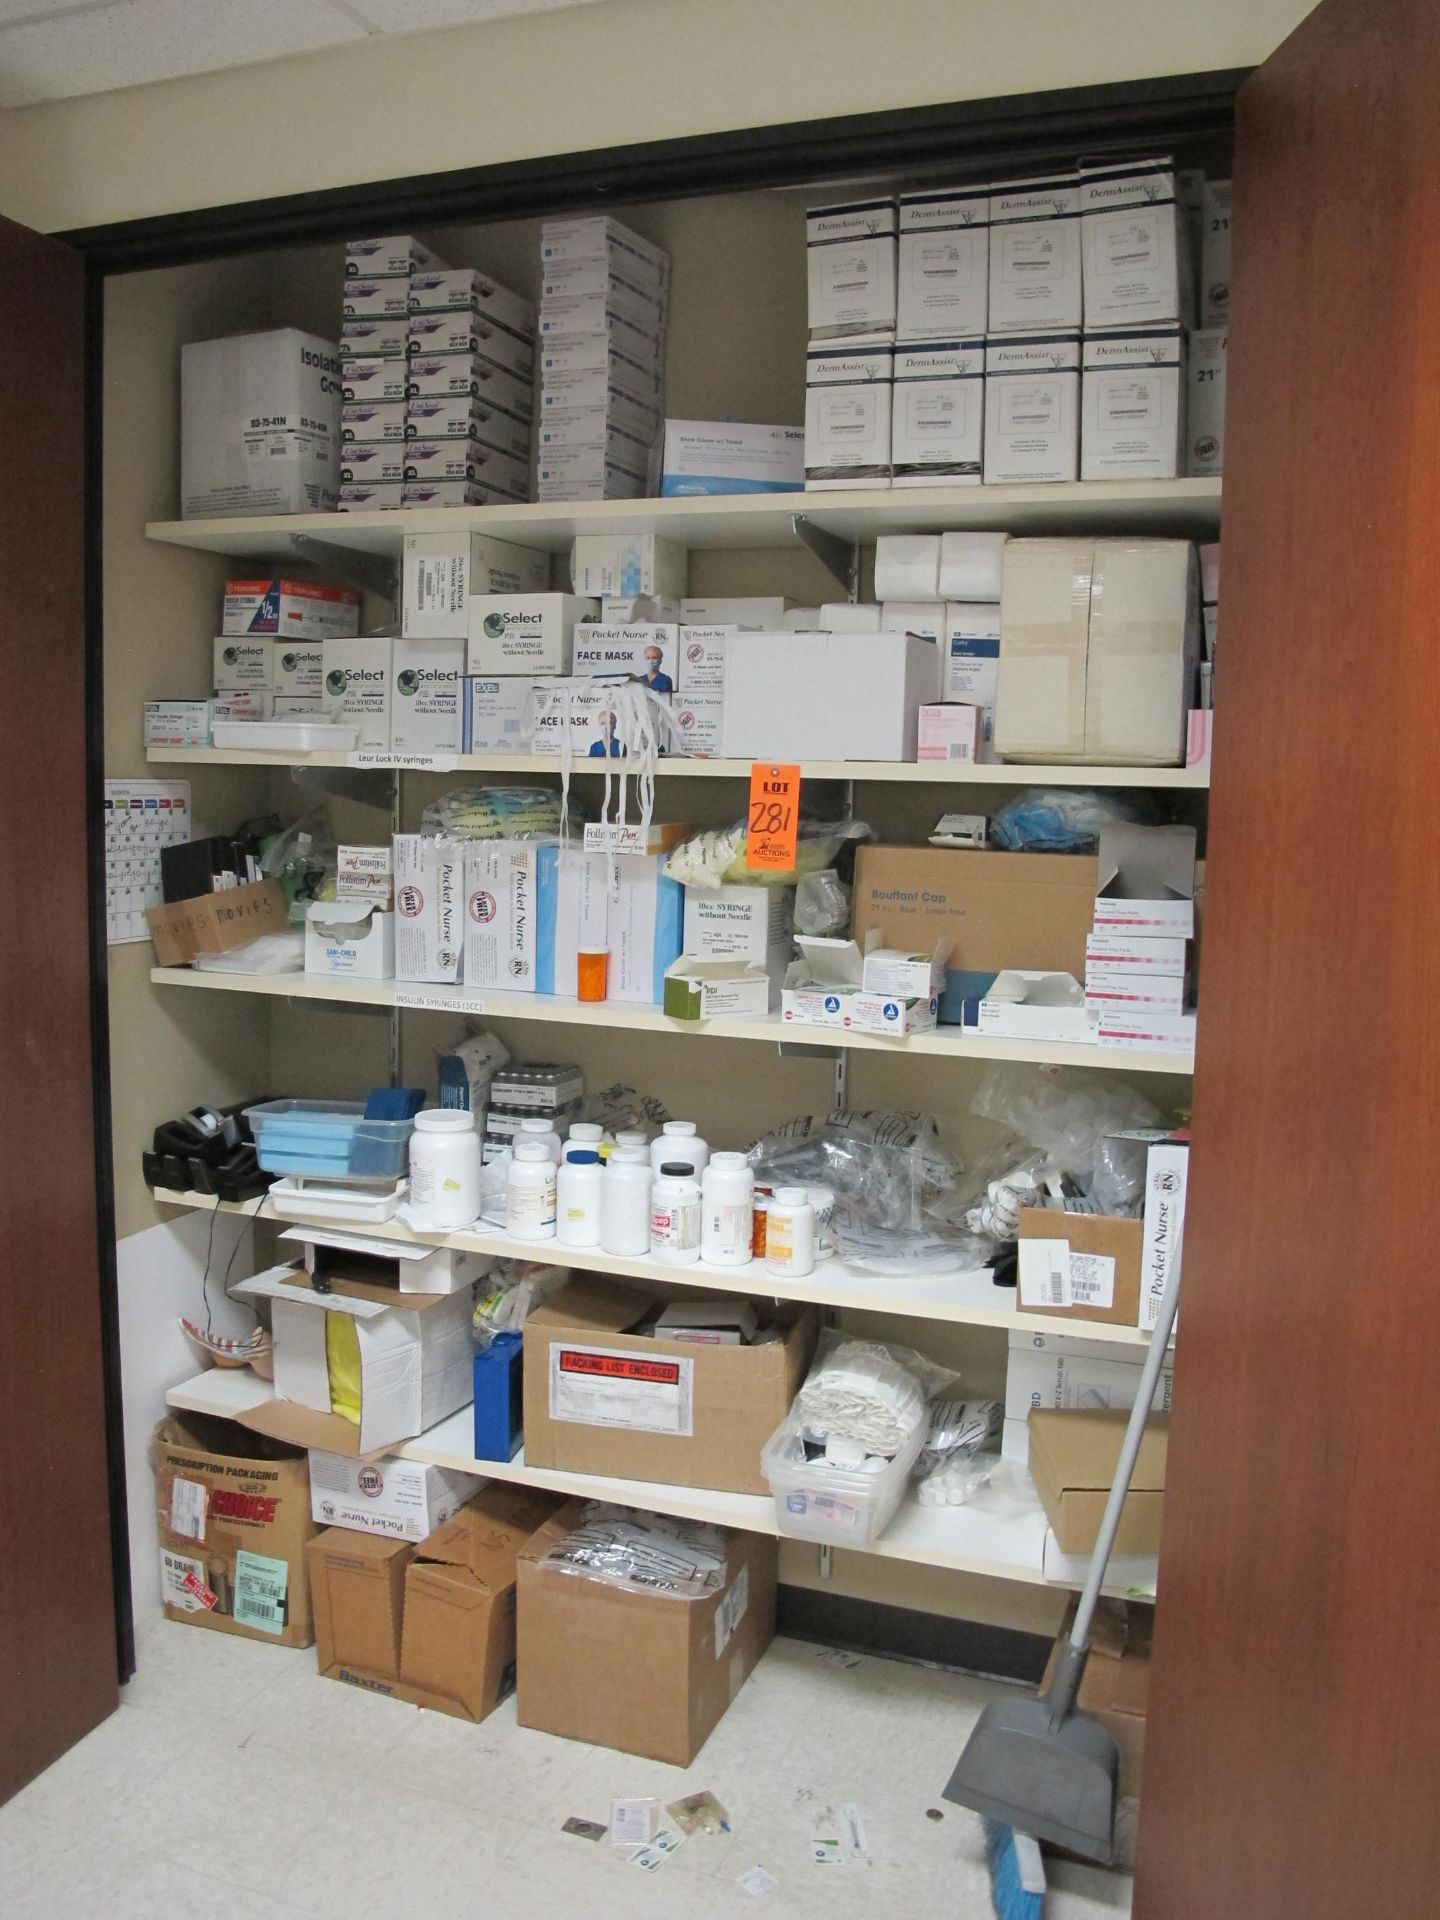 Contents of Closet including Medical Supplies